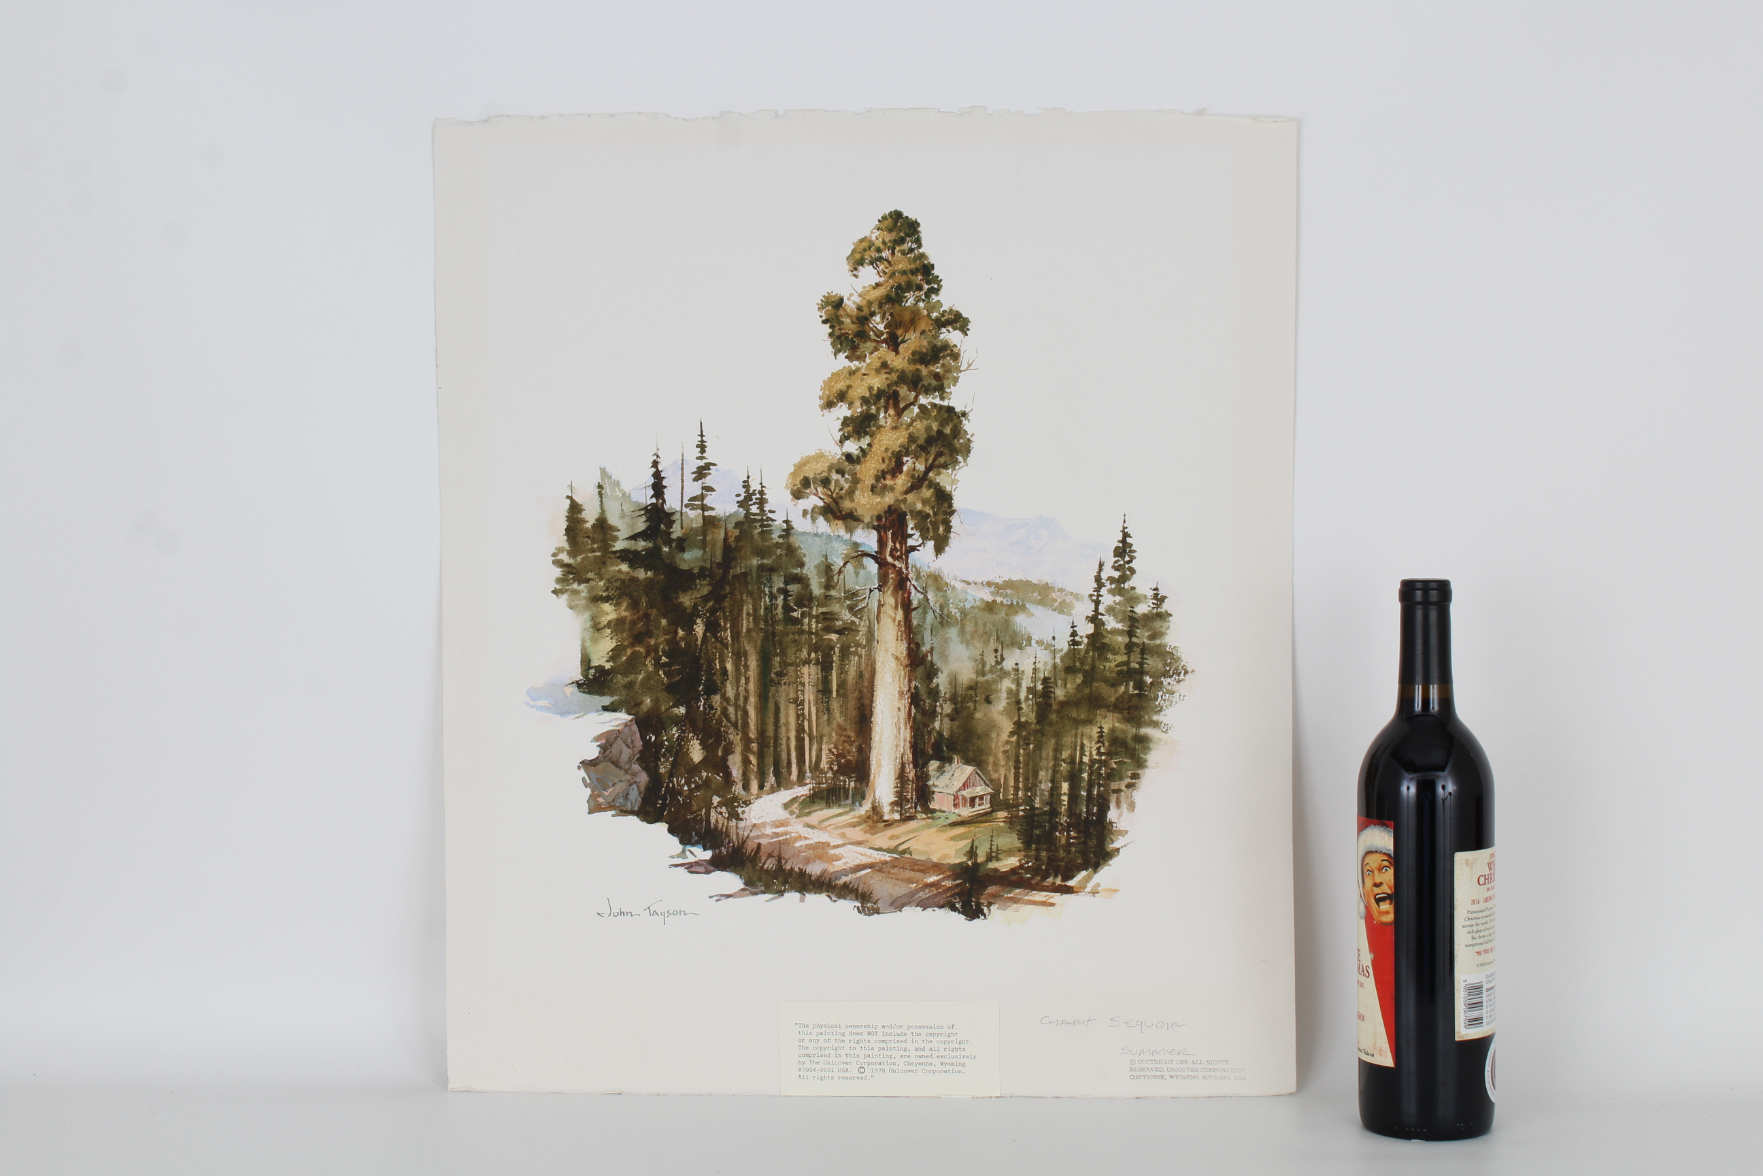 John Tayson (B. 1956) "Giant Sequoia Tree" - Image 2 of 5